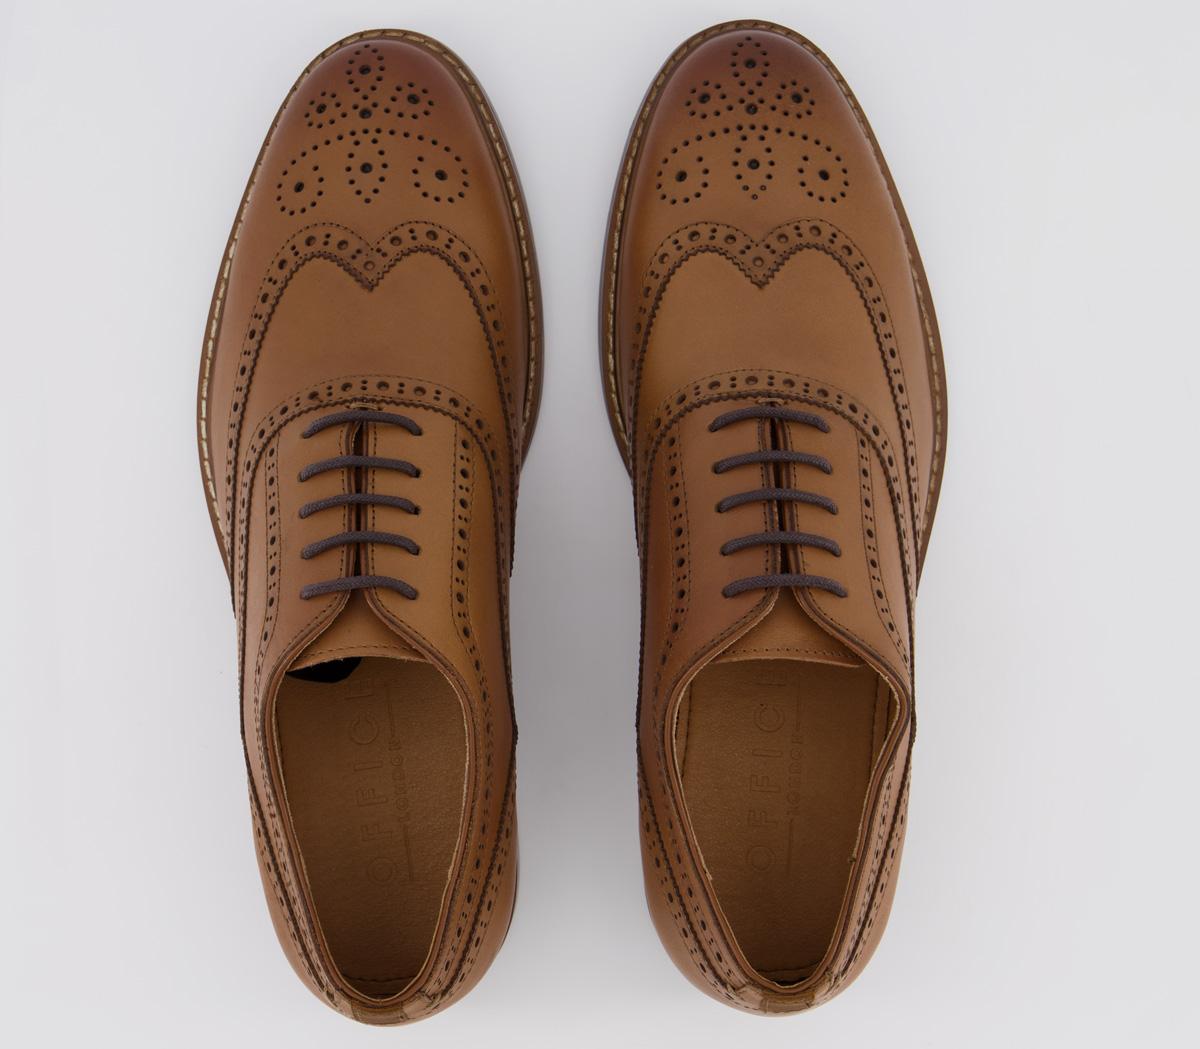 OFFICE Mean Brogue Tan Leather - Men’s Smart Shoes